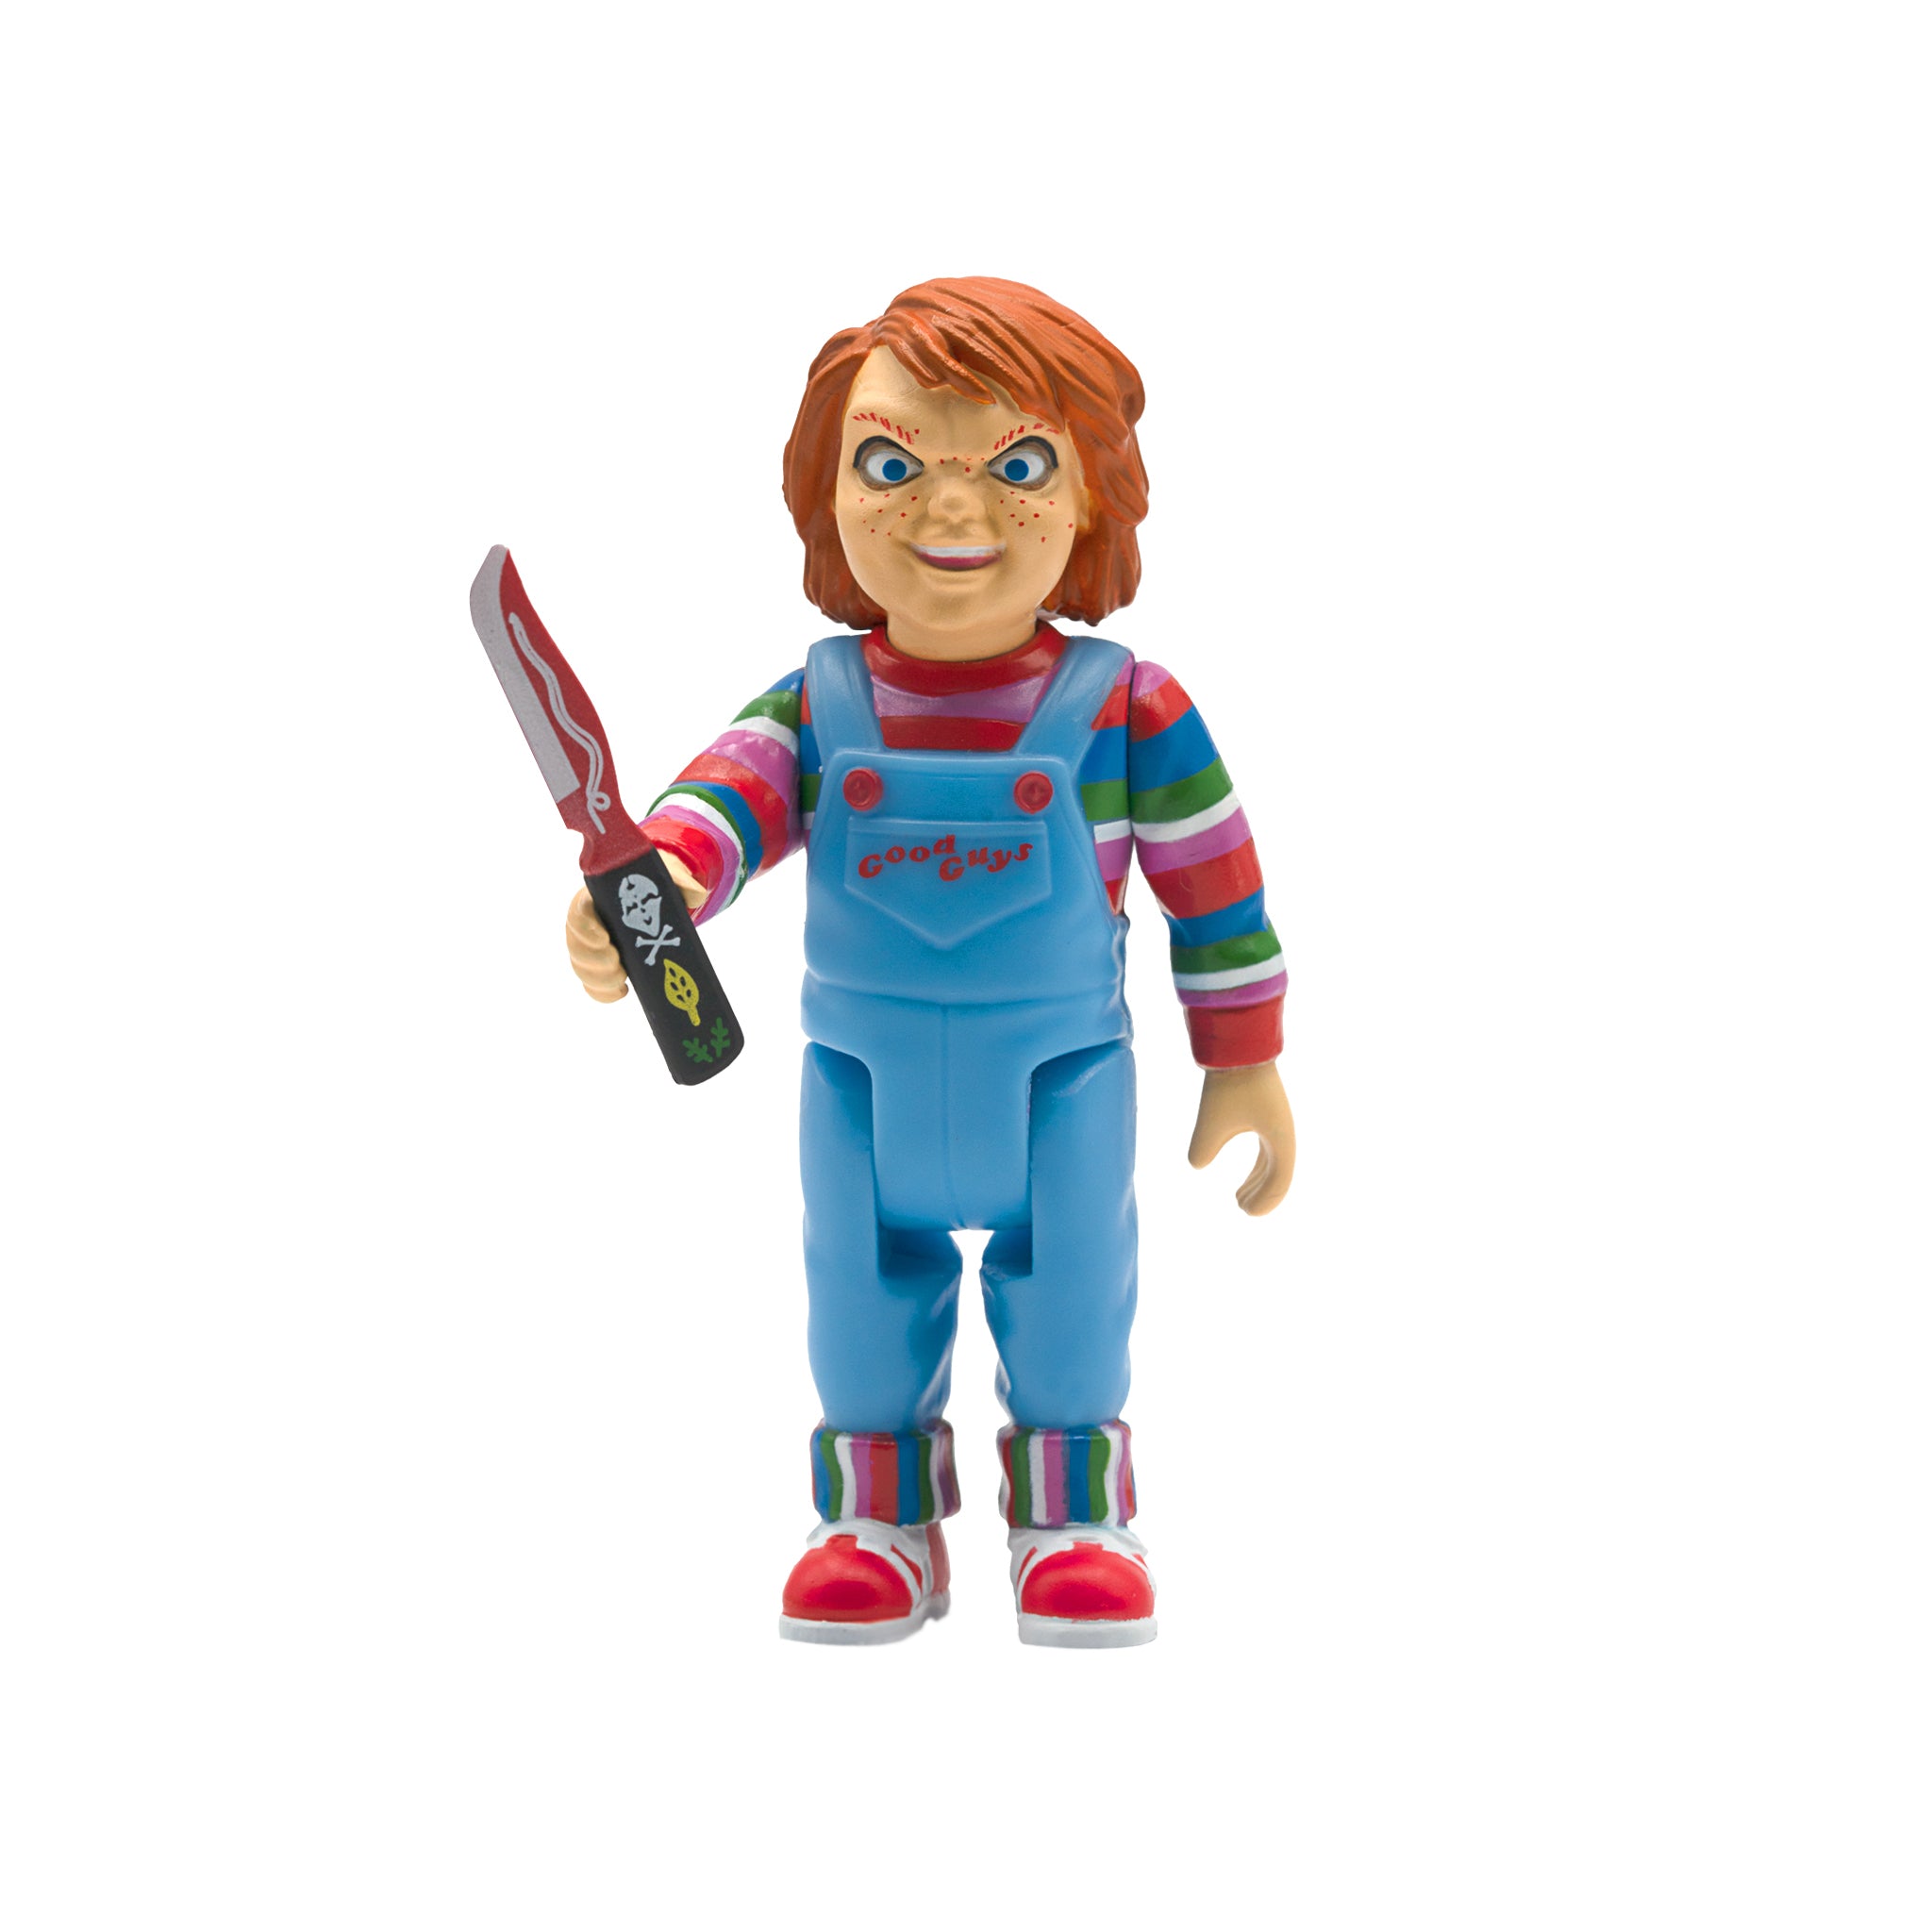 Child's Play ReAction Figure - Evil Chucky